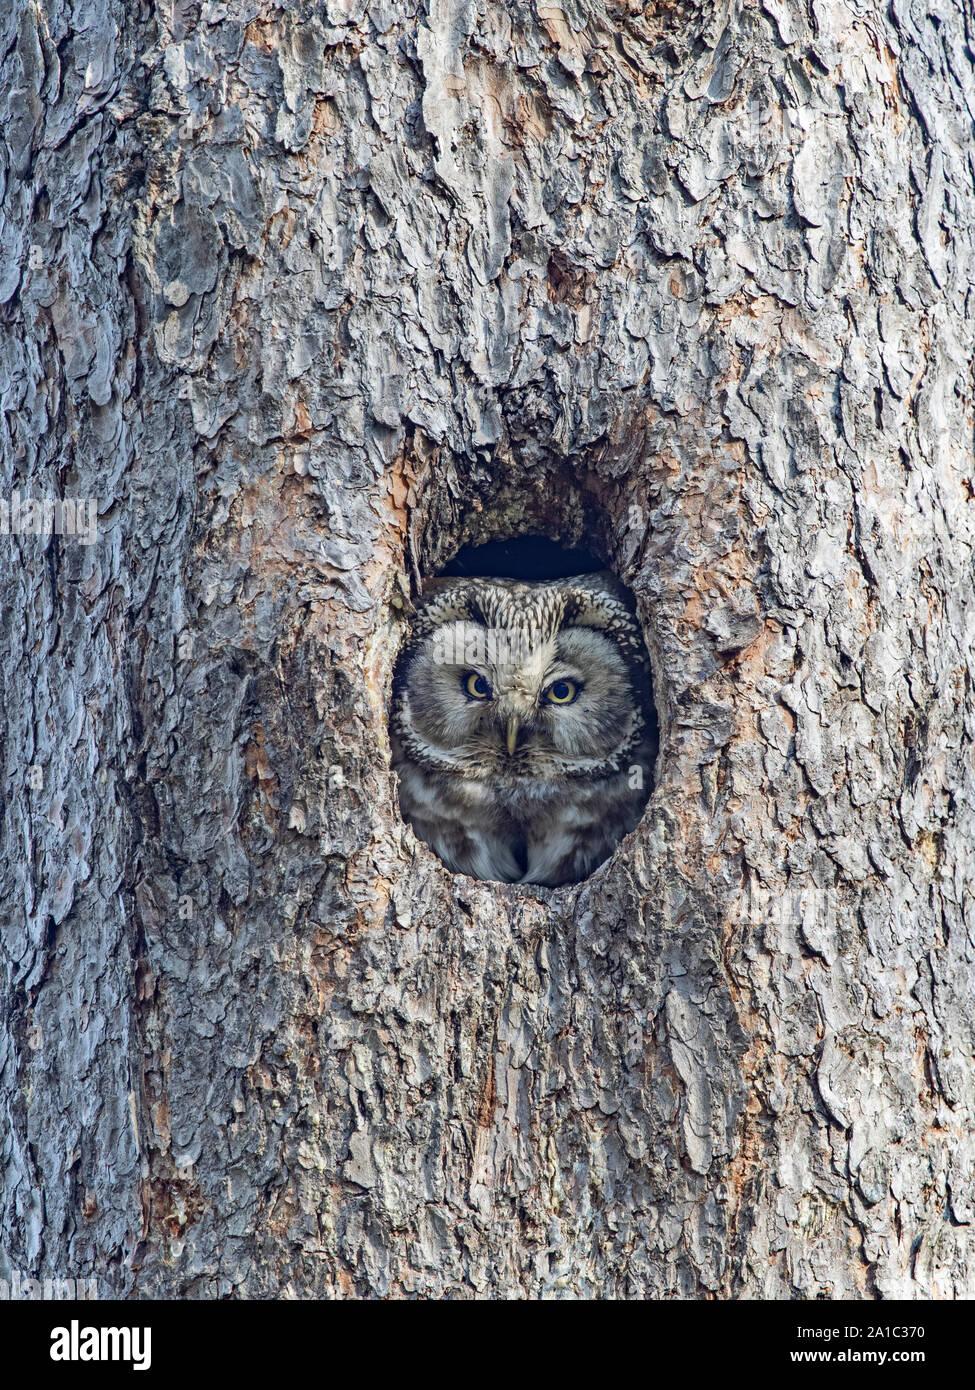 Tengmalm's Owl, Aegoleus funereus Peering aus dem Nest Loch im Kiefer, Liminka, Finnland Frühjahr Stockfoto